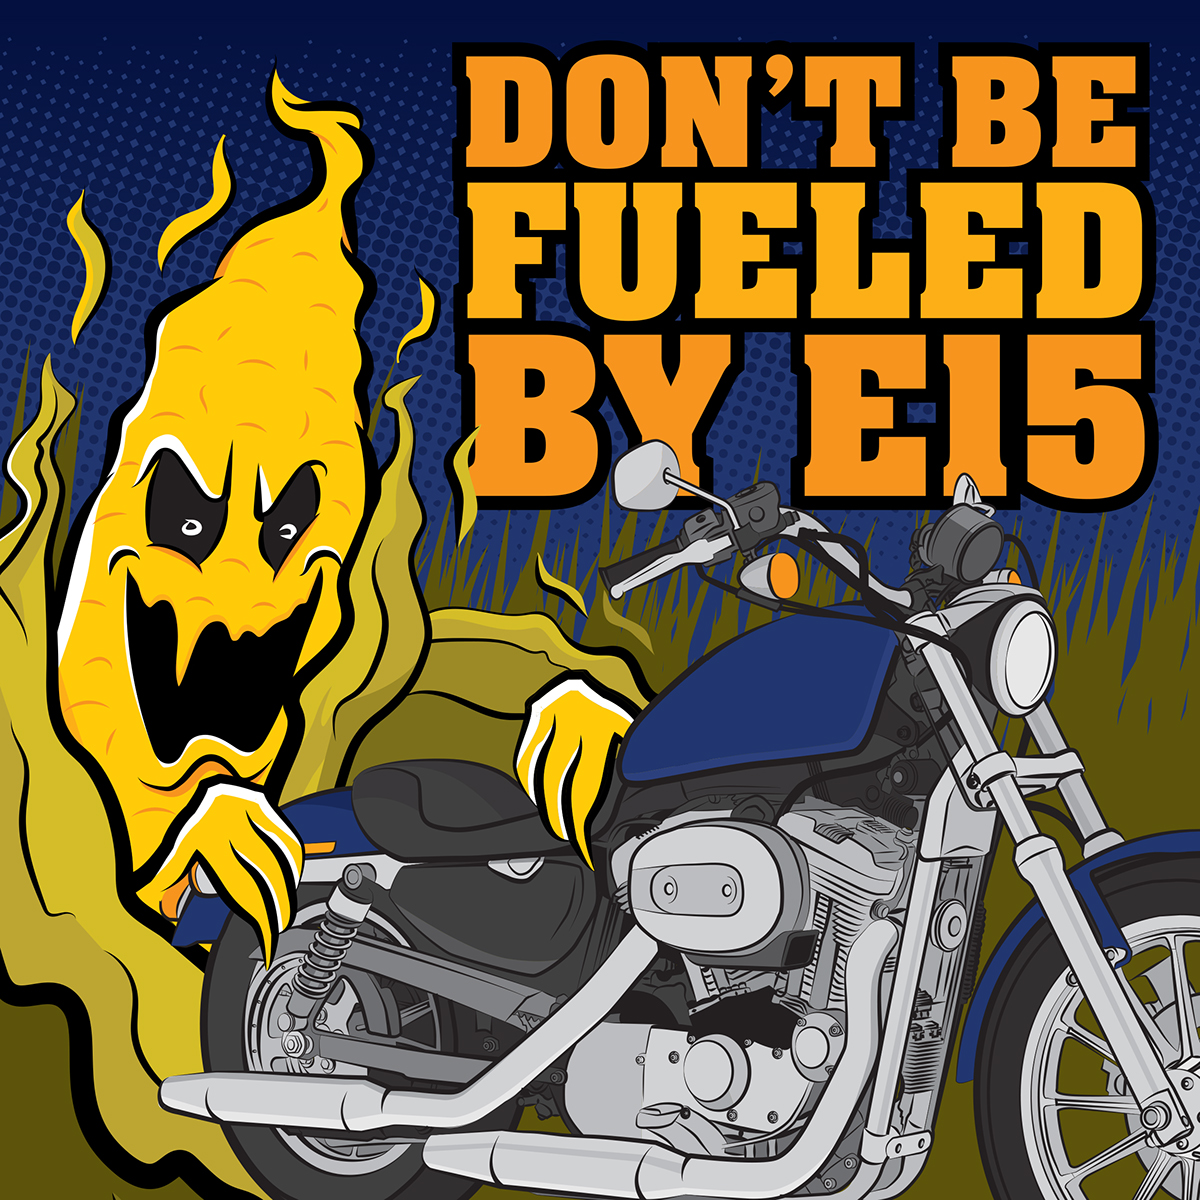 ethanol corn e15 amerca motorcycle engine fuel petrol energy